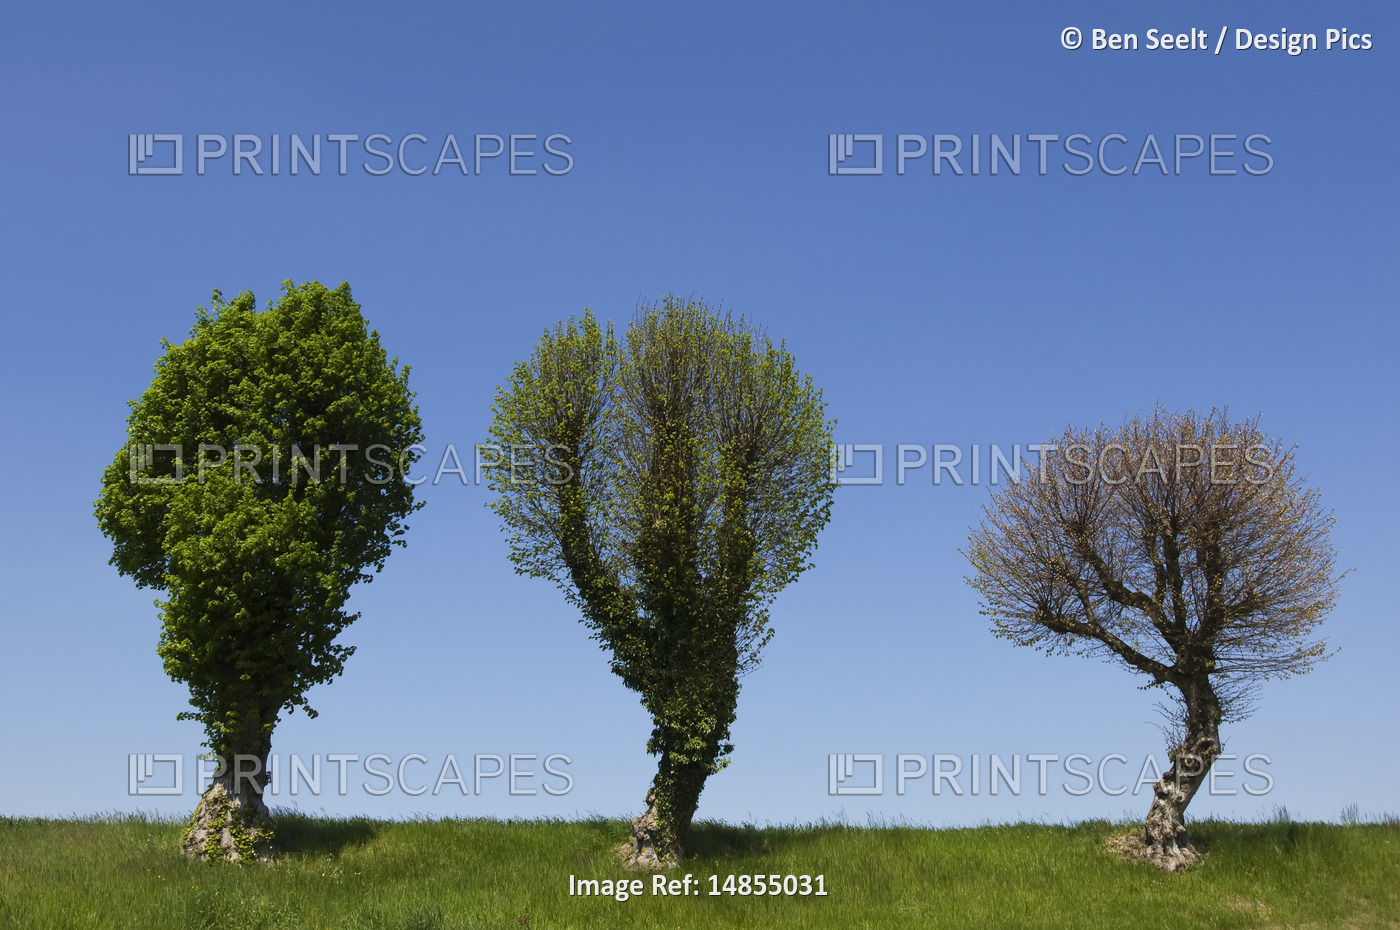 Three Trees Against Sky, Charmoy, Aube, France